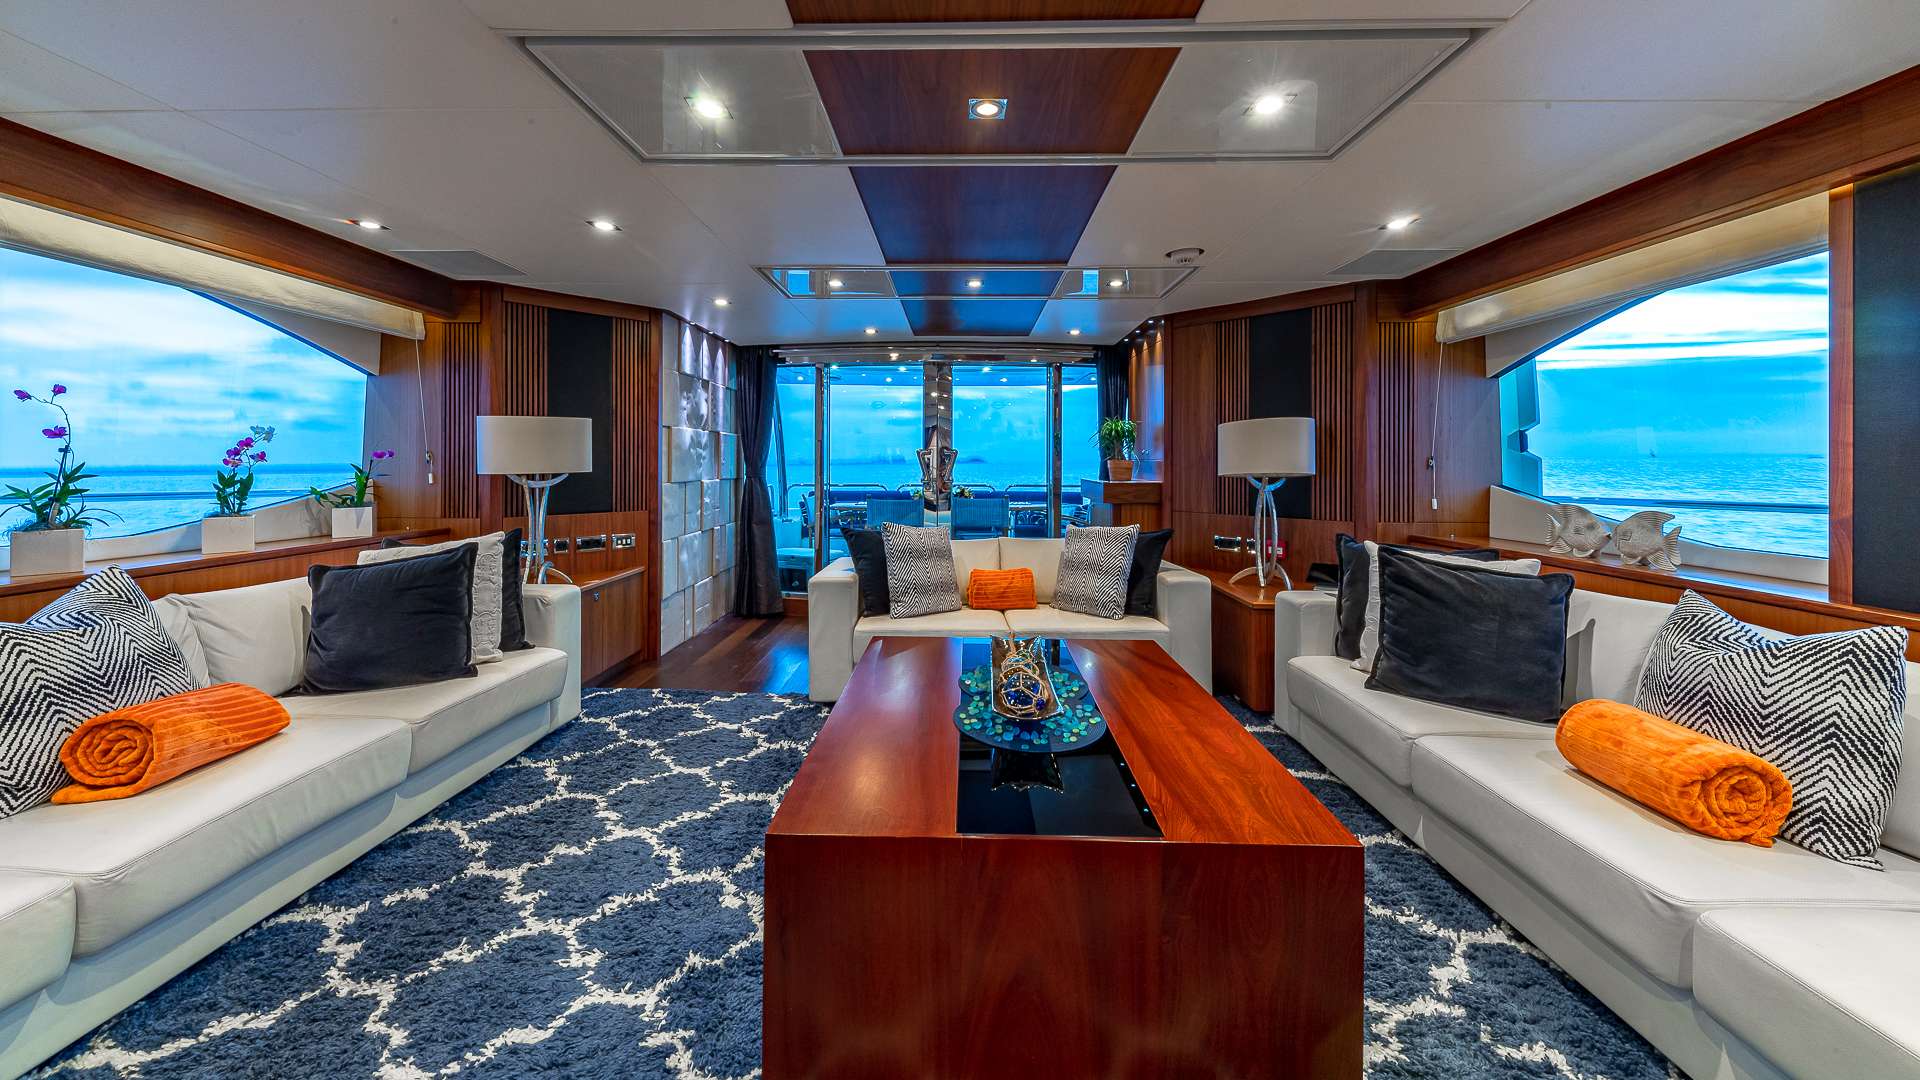 EMRYS Yacht Charter - Main Salon